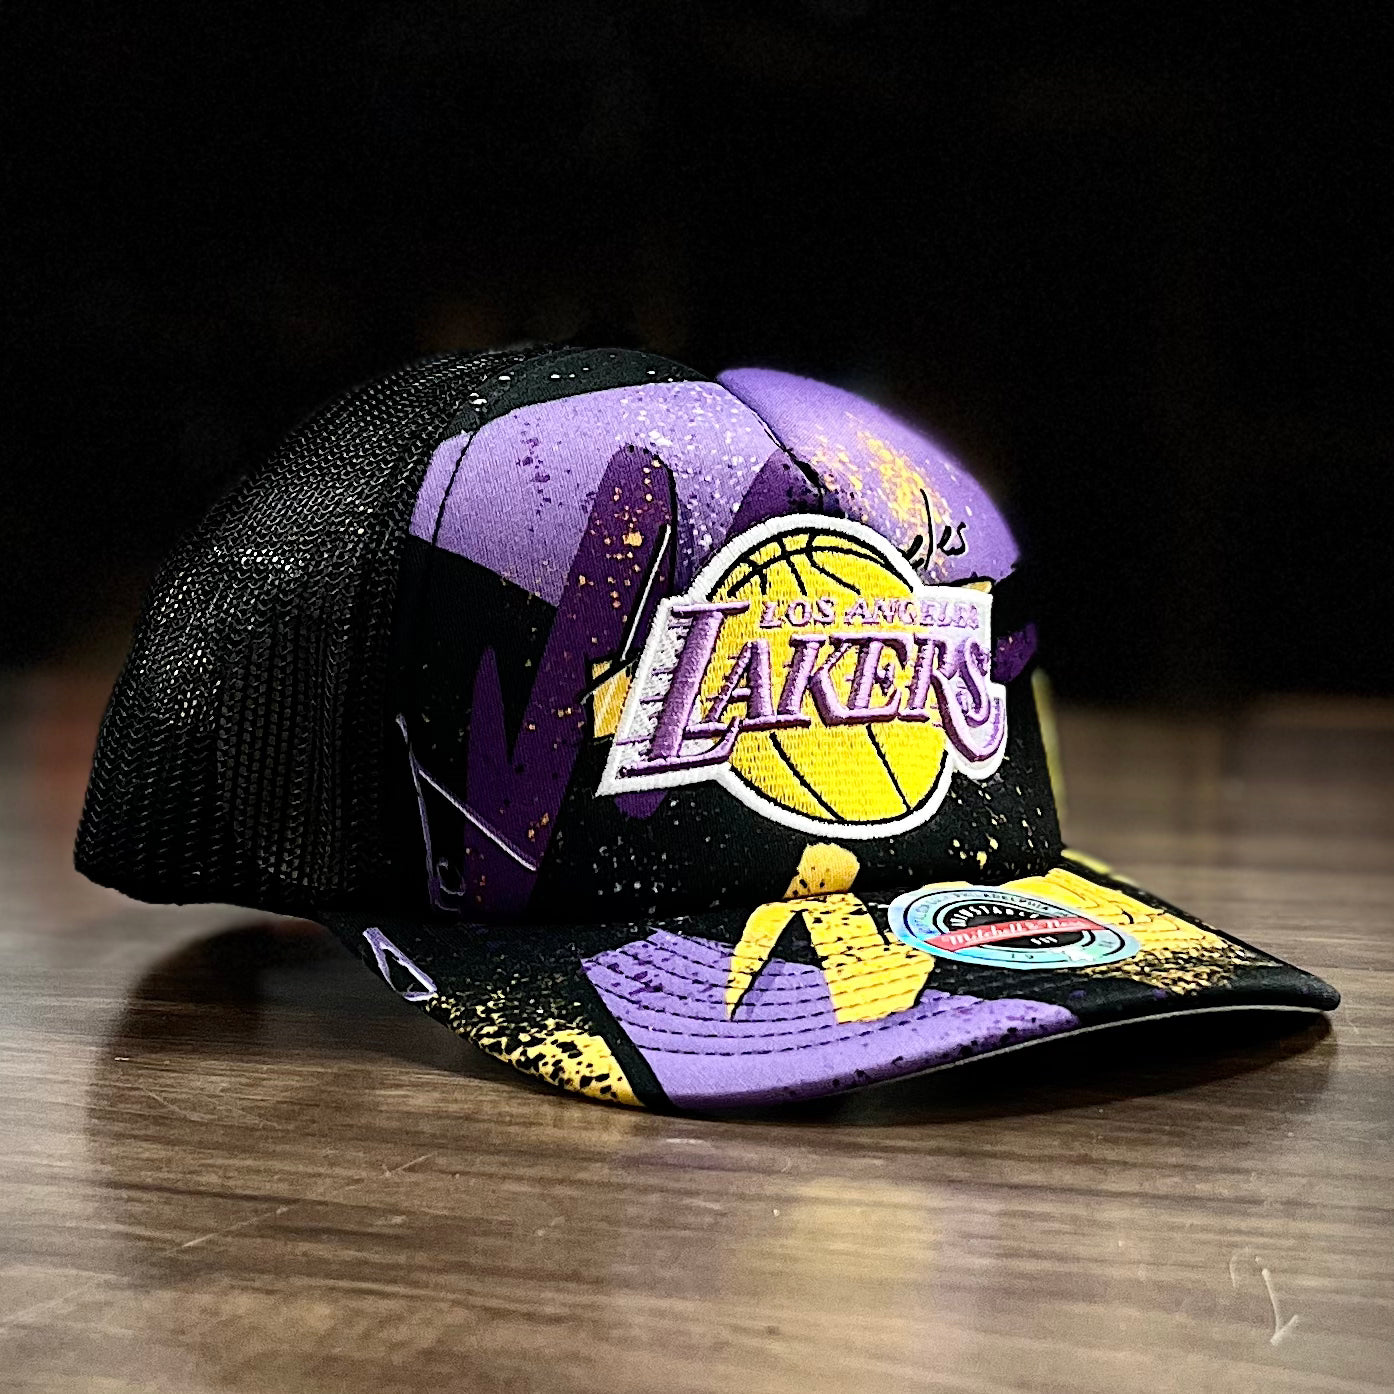 Los Angeles Lakers Block Arch Mitchell & Ness 2-Tone NBA Snapback Hat